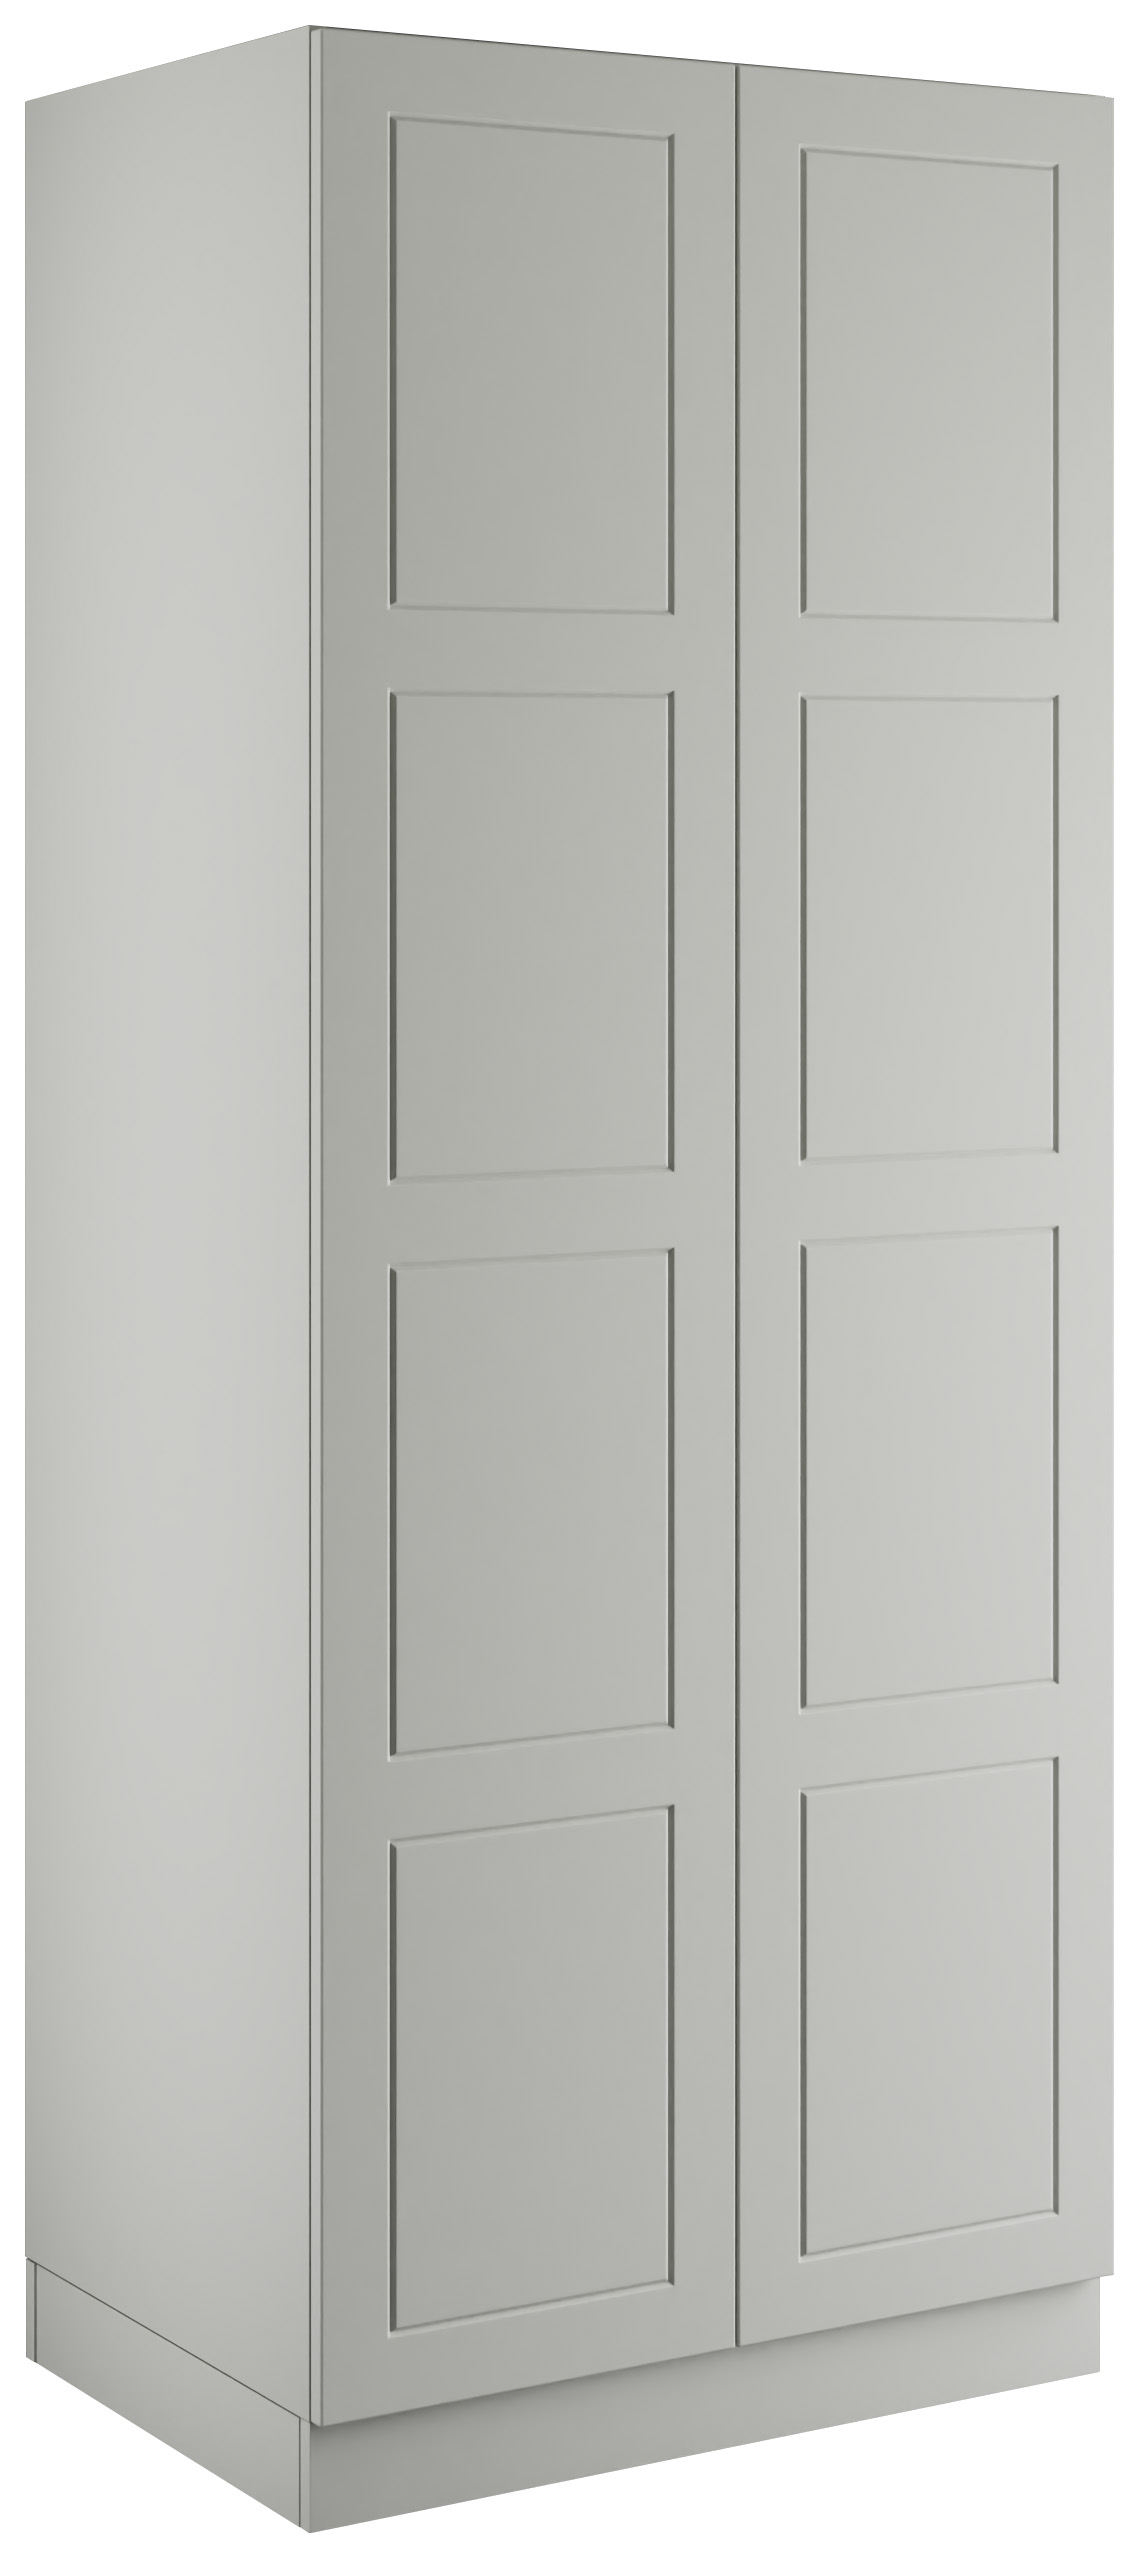 Bramham Light Grey Double Wardrobe with Shelves - 900 x 2260 x 608mm